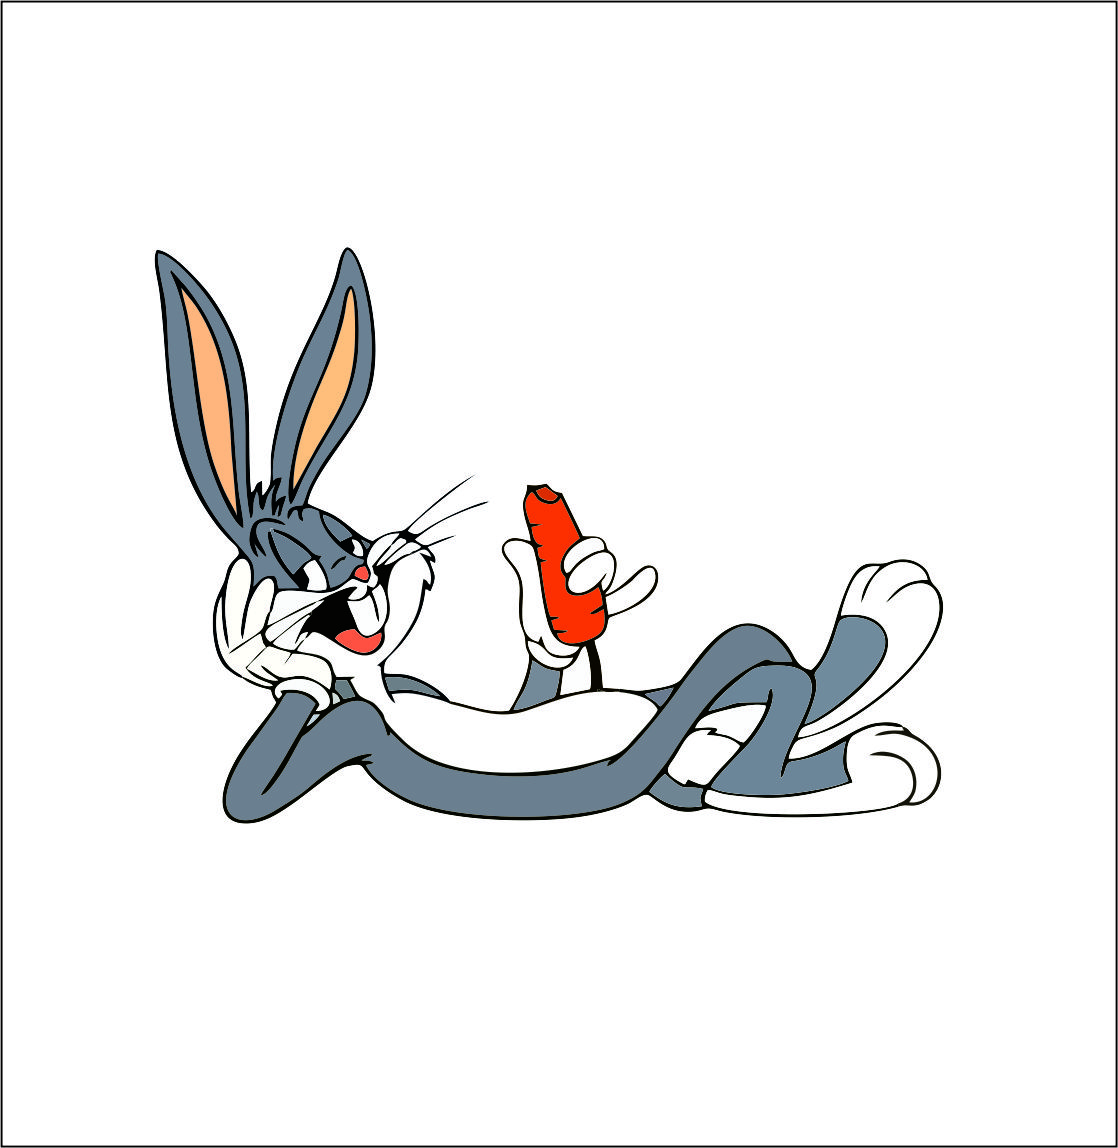 Download Bugs bunny (looney tunes) logo | SVGprinted